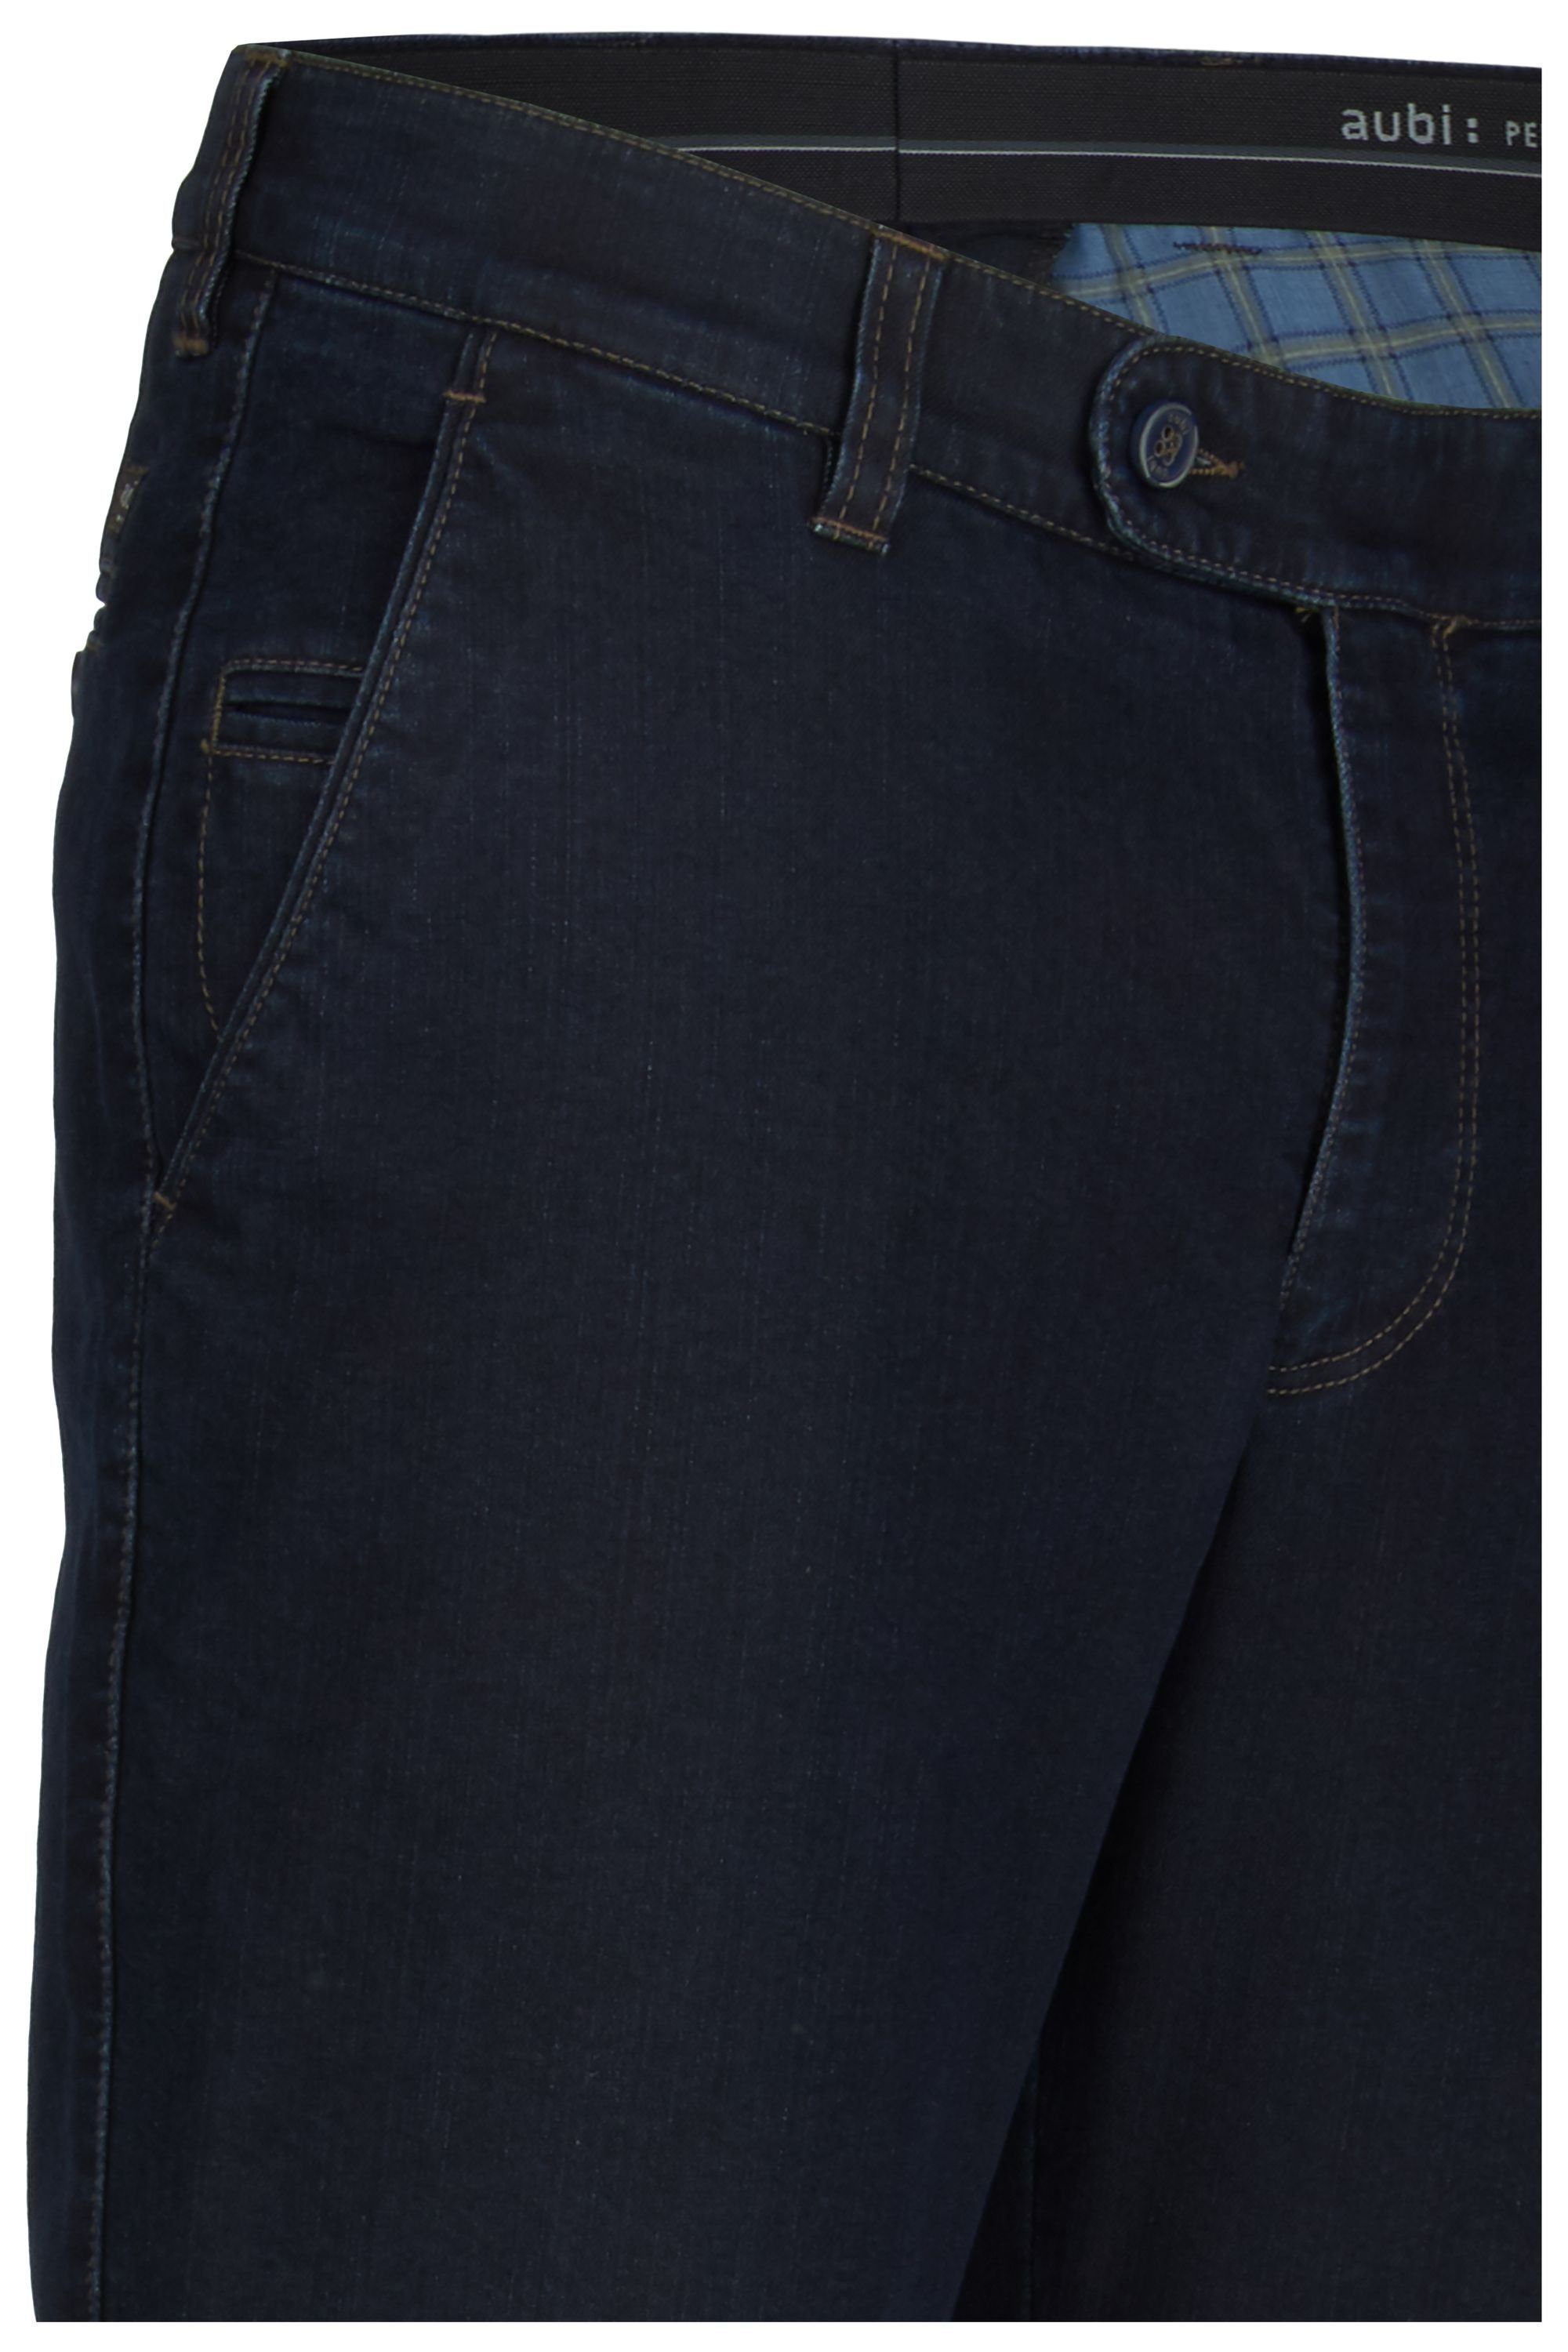 Jeans dark Stretch (48) stone aubi Fit Jeans Herren Modell Bequeme Thermo Hose Winter aubi: Perfect 926